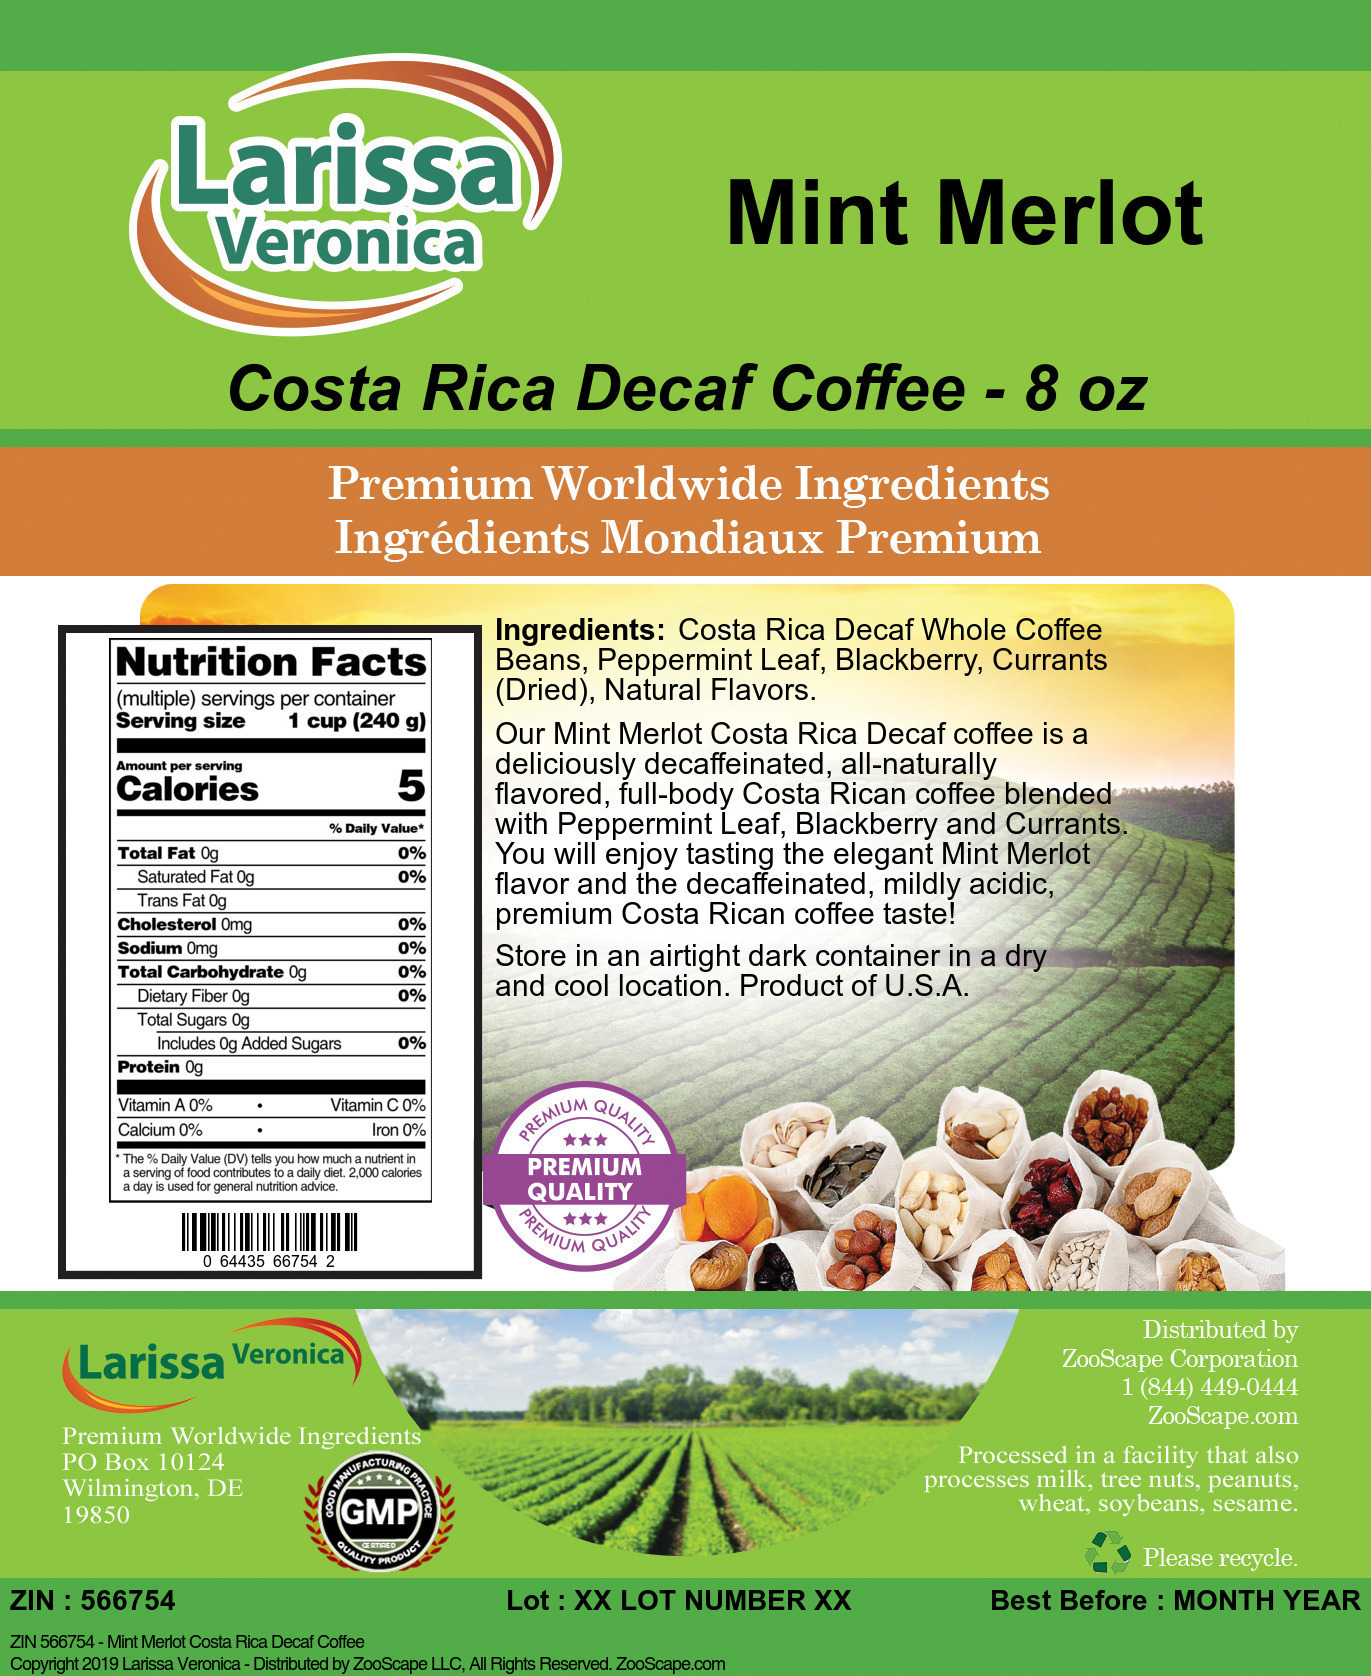 Mint Merlot Costa Rica Decaf Coffee - Label